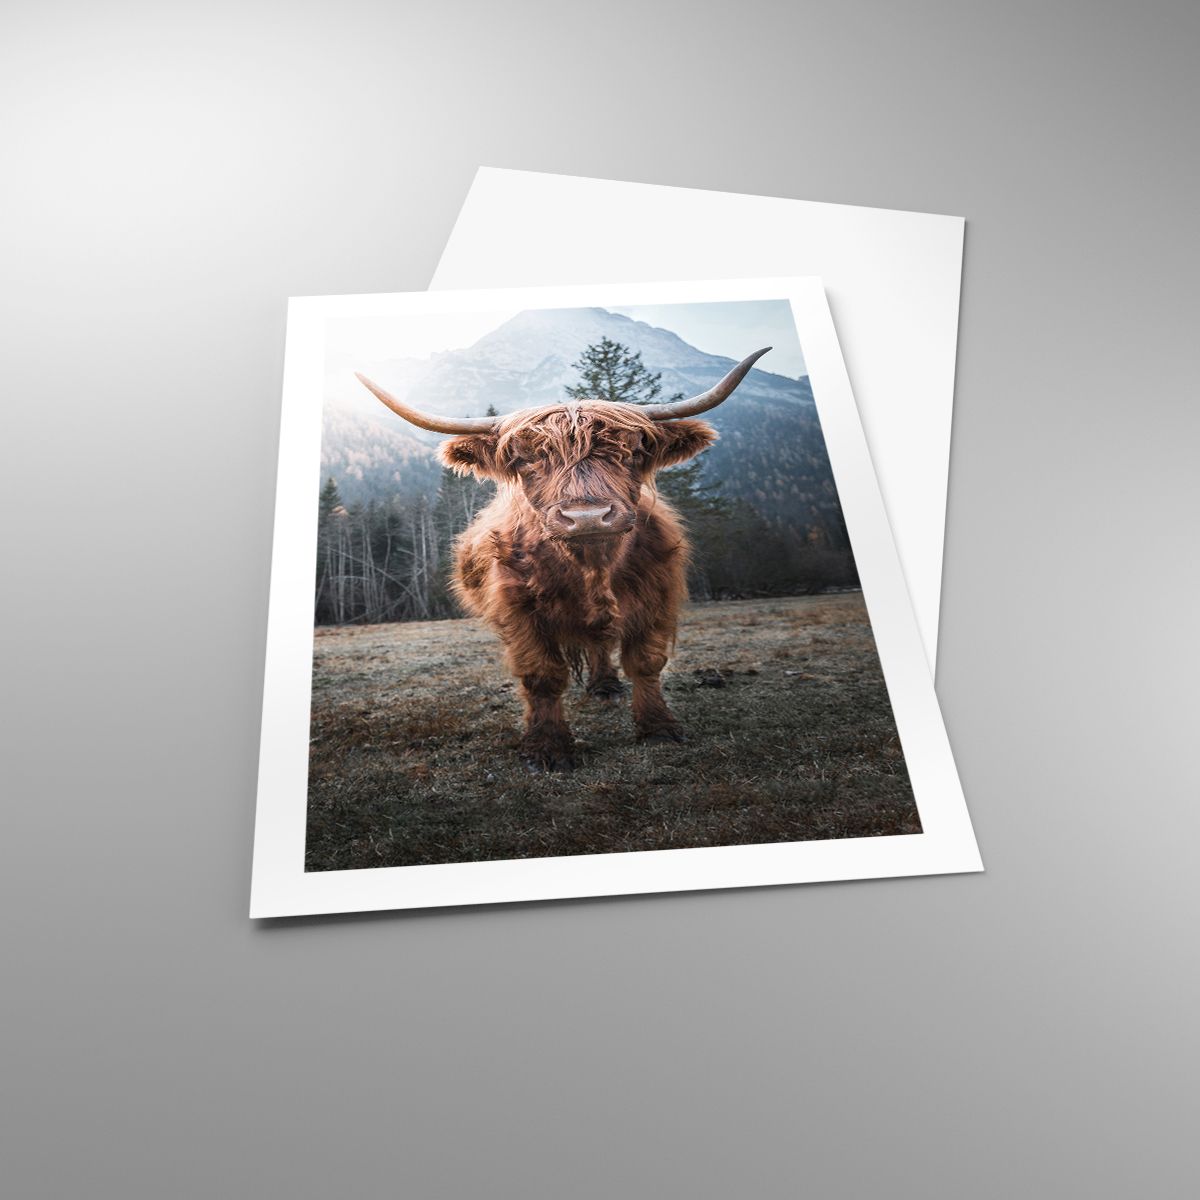 Poster Berge, Poster Schottische Kuh, Poster Weide, Poster Tiere, Poster Landschaft